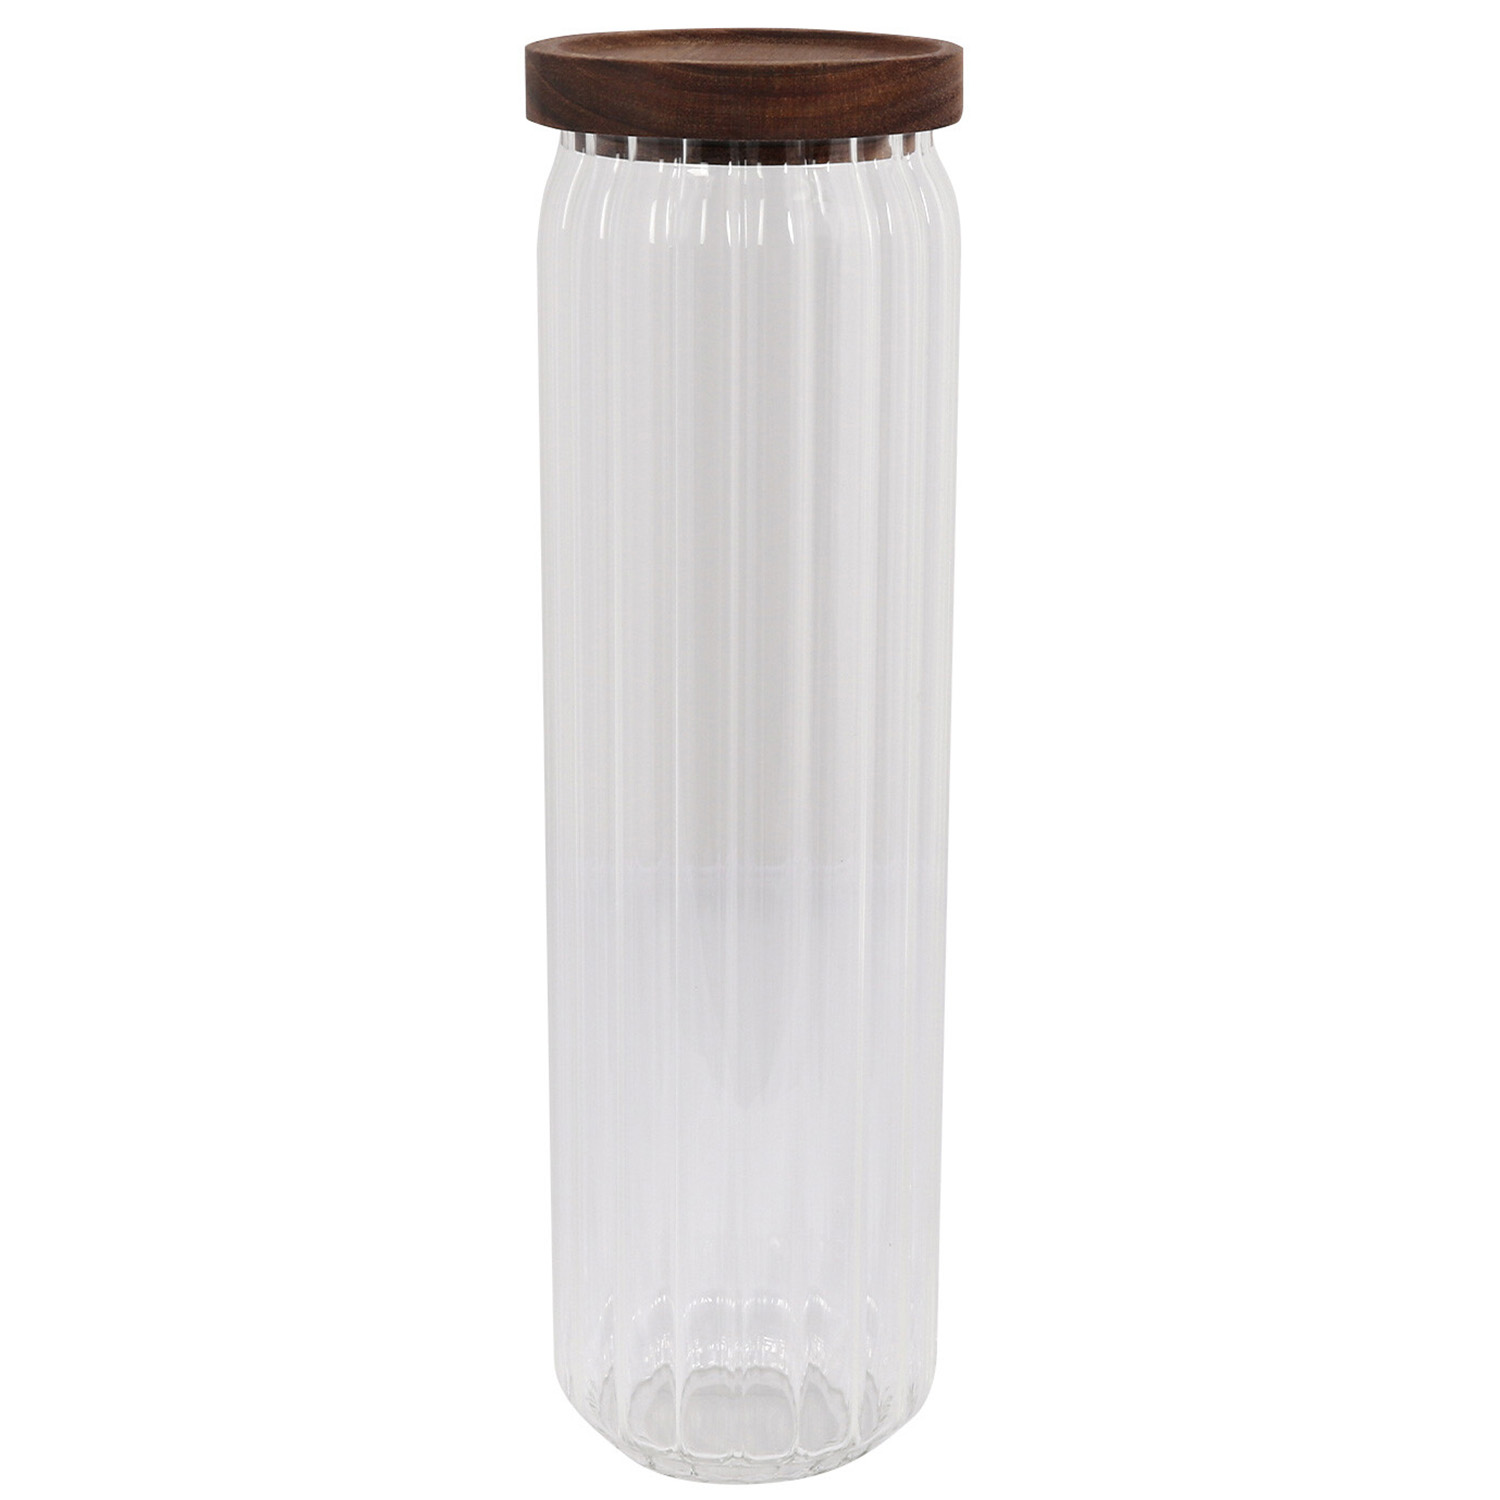 Glass Storage Jar with Acacia Wood Lid 1.6L Image